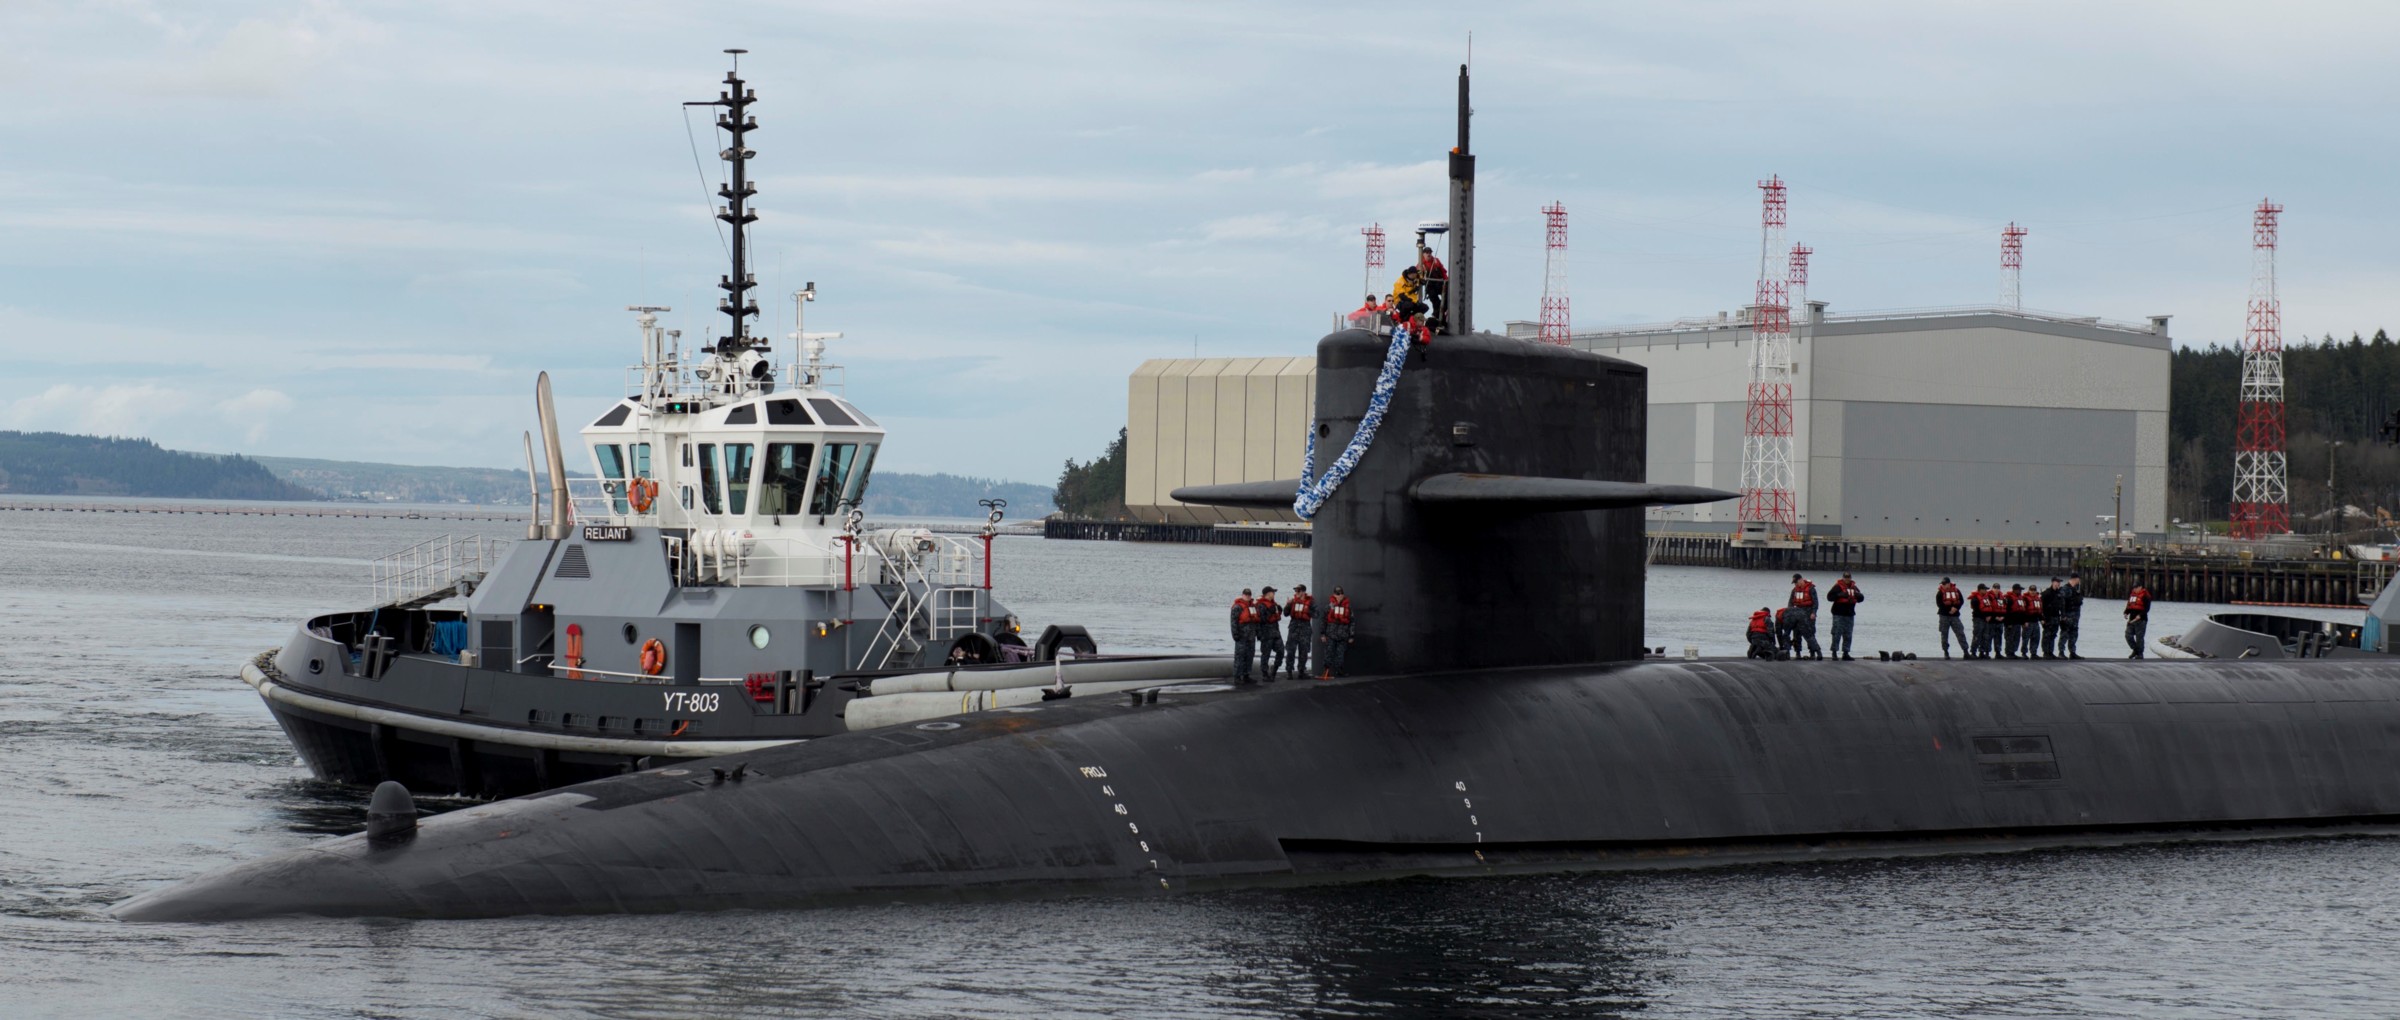 ssbn-733 uss nevada ohio class ballistic missile submarine 2017 02 naval base kitsap bangor bremerton washington